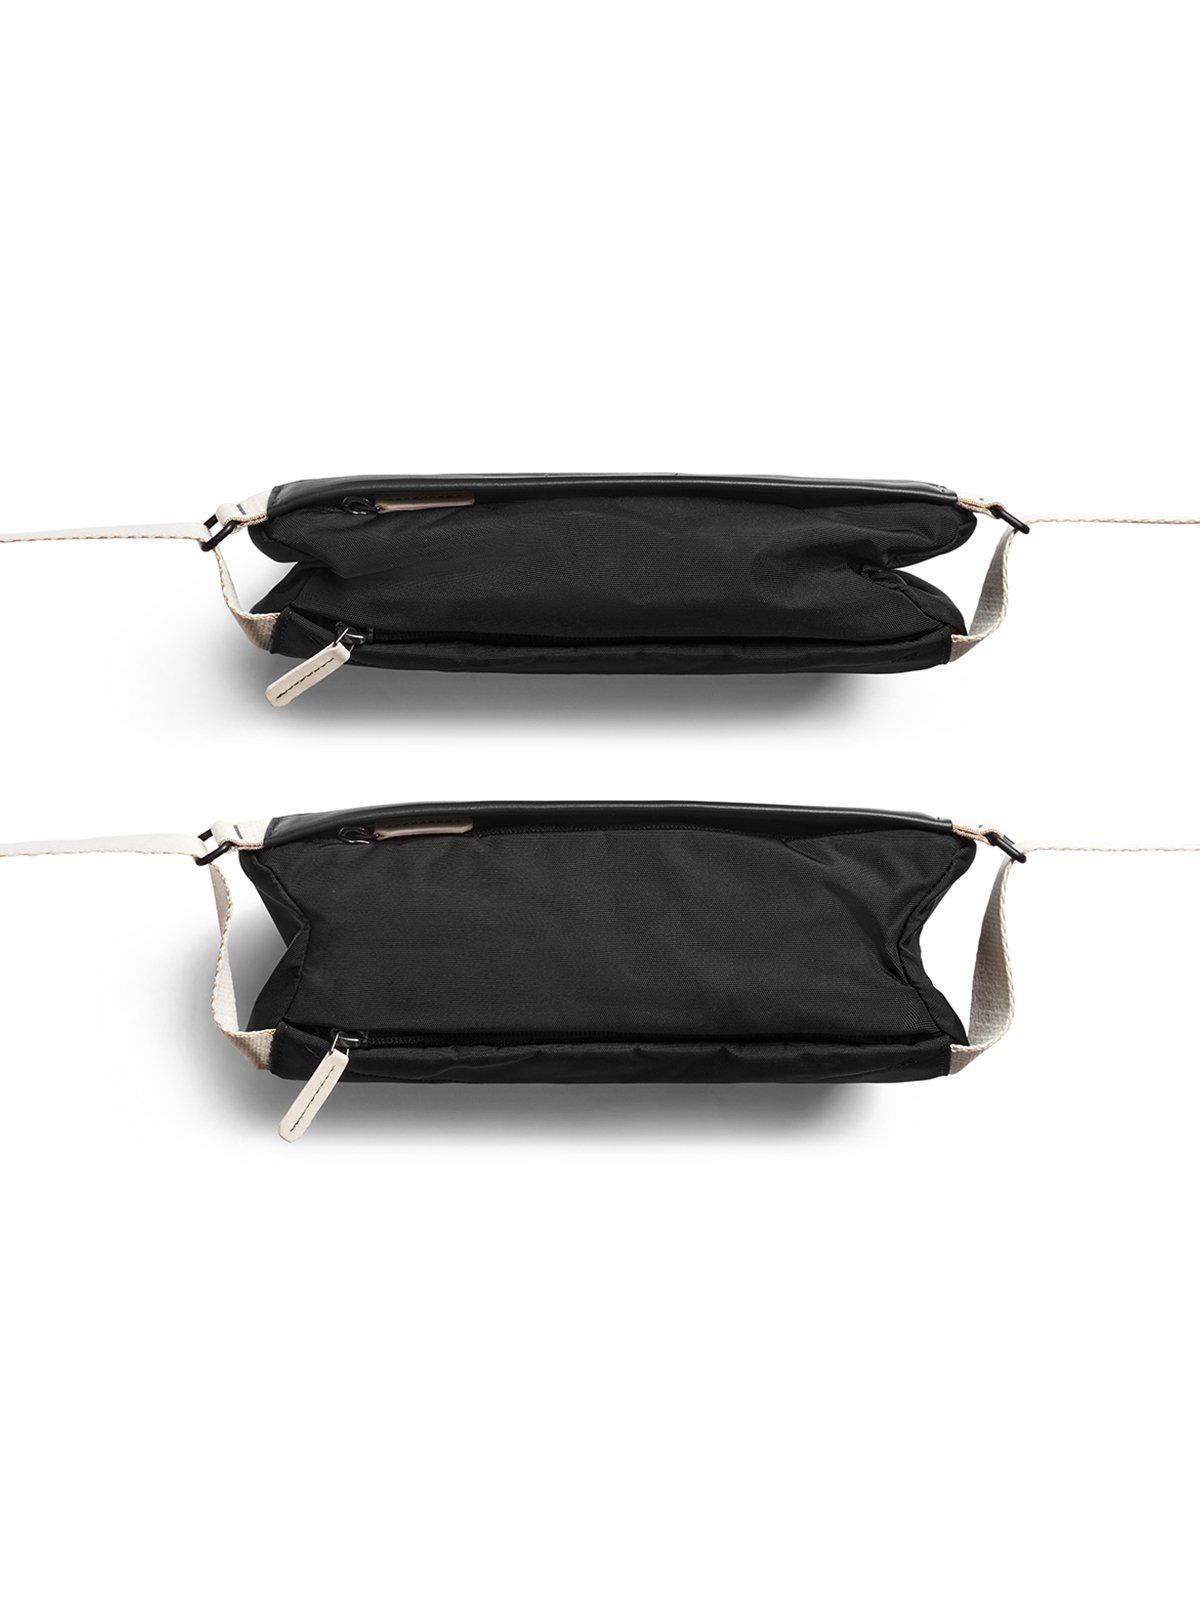 Bellroy Sling Bag Mini Premium Black Sand